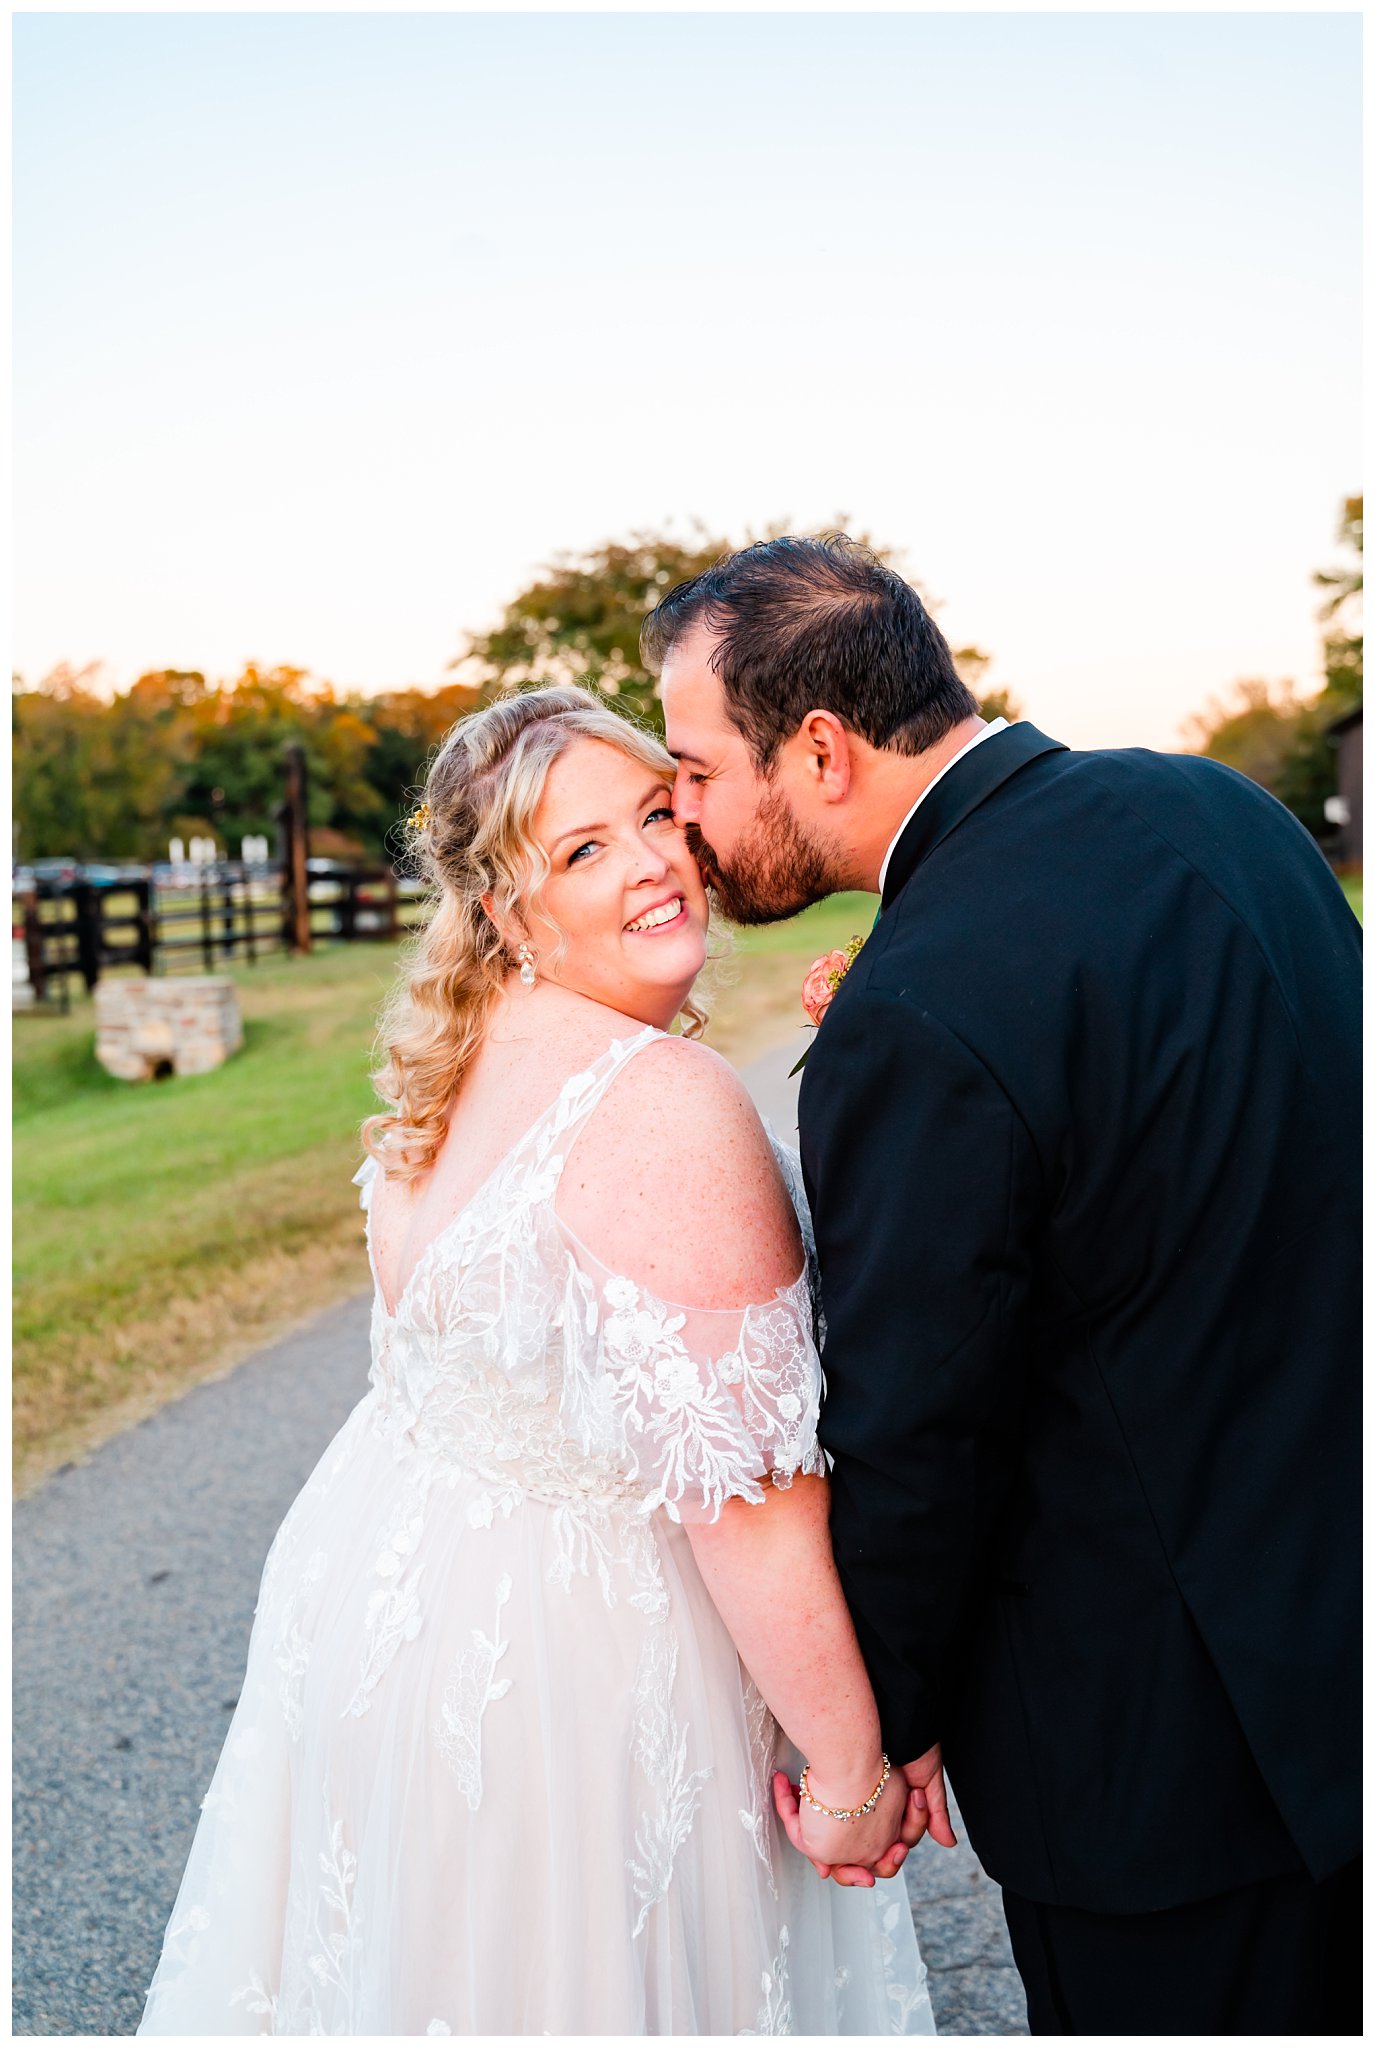 Greensboro wedding photographer shoots bride and groom portrait